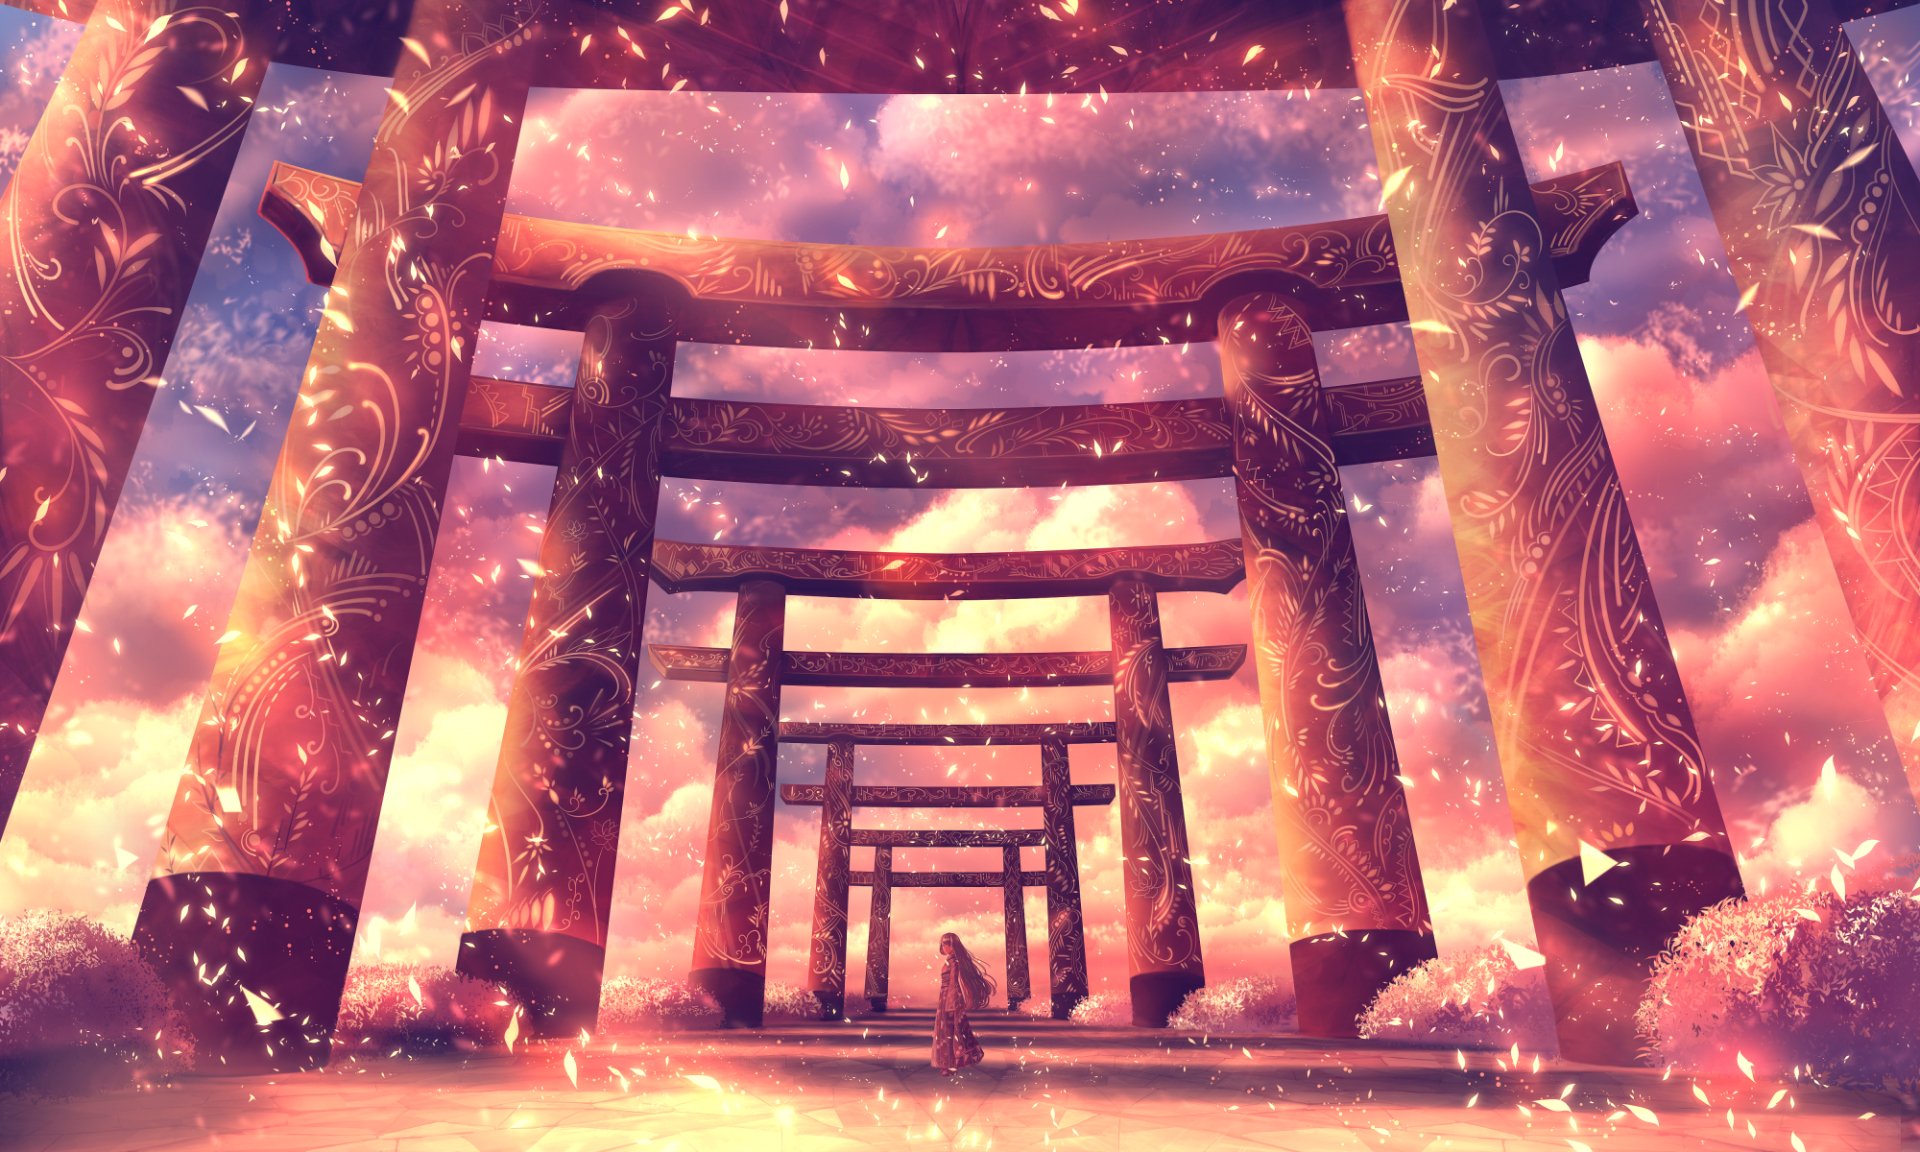 Sacred Shrines Anime Art Wallpapers: Hd Manga Epic Fan Art (@wallpapers)